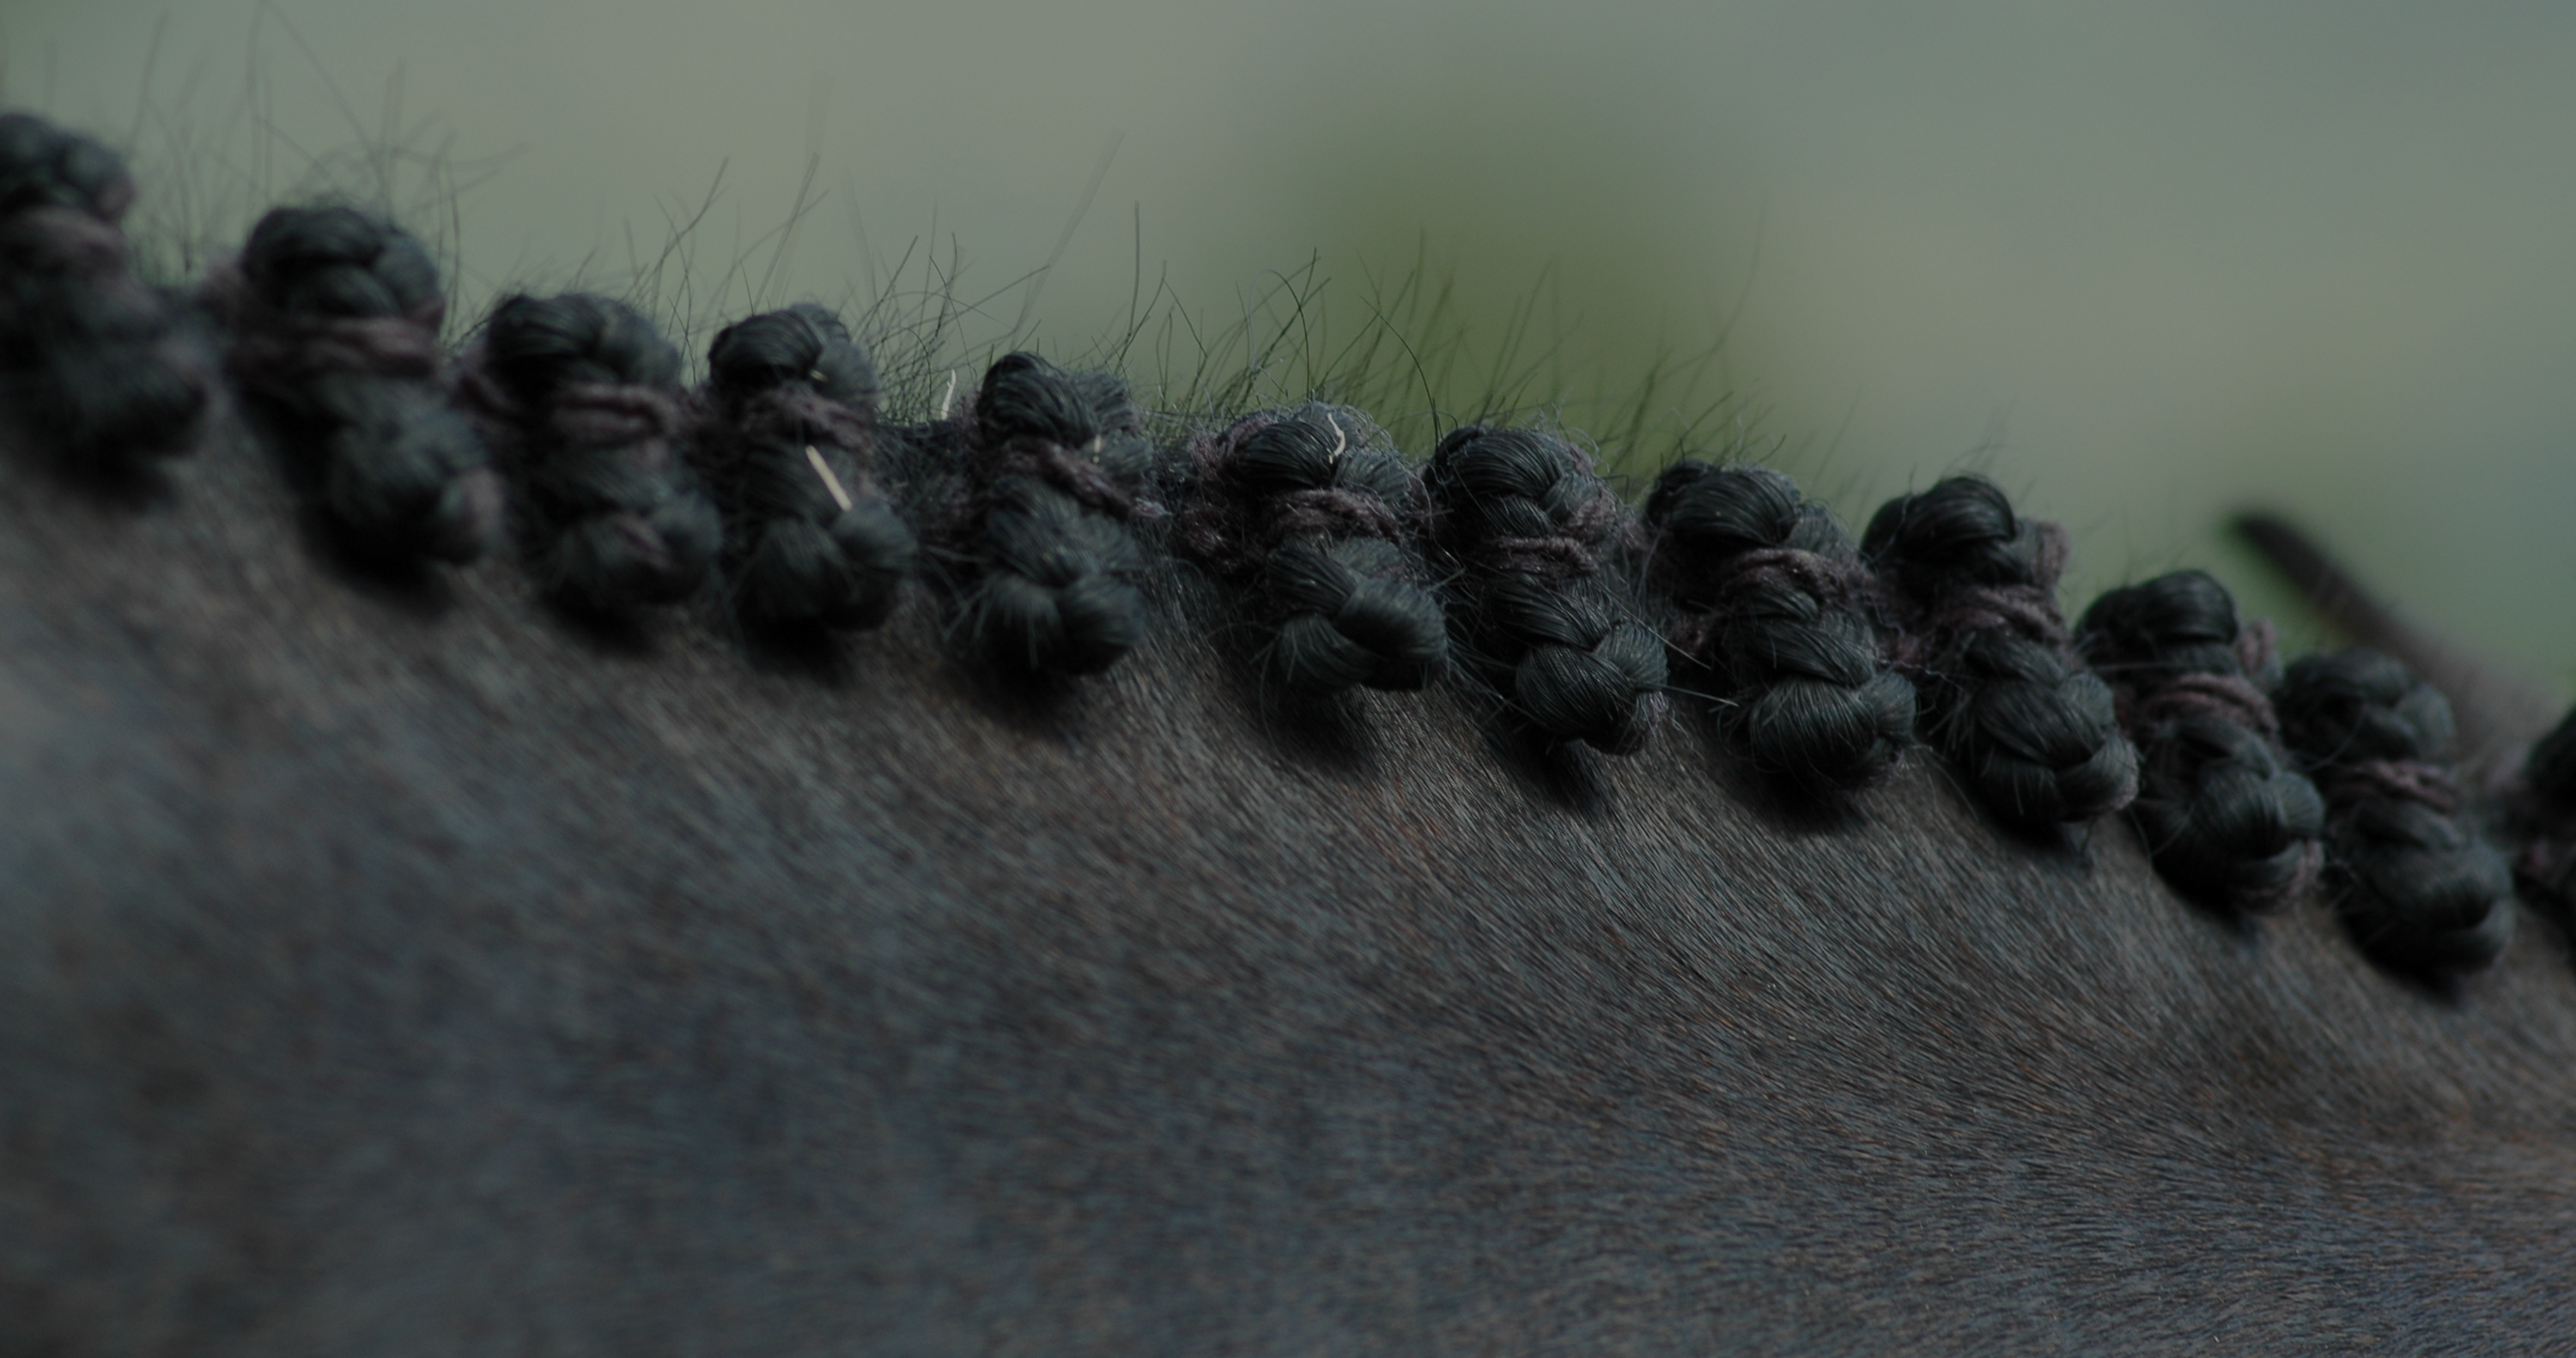 horse show braids, horse mane braids for hunter horses